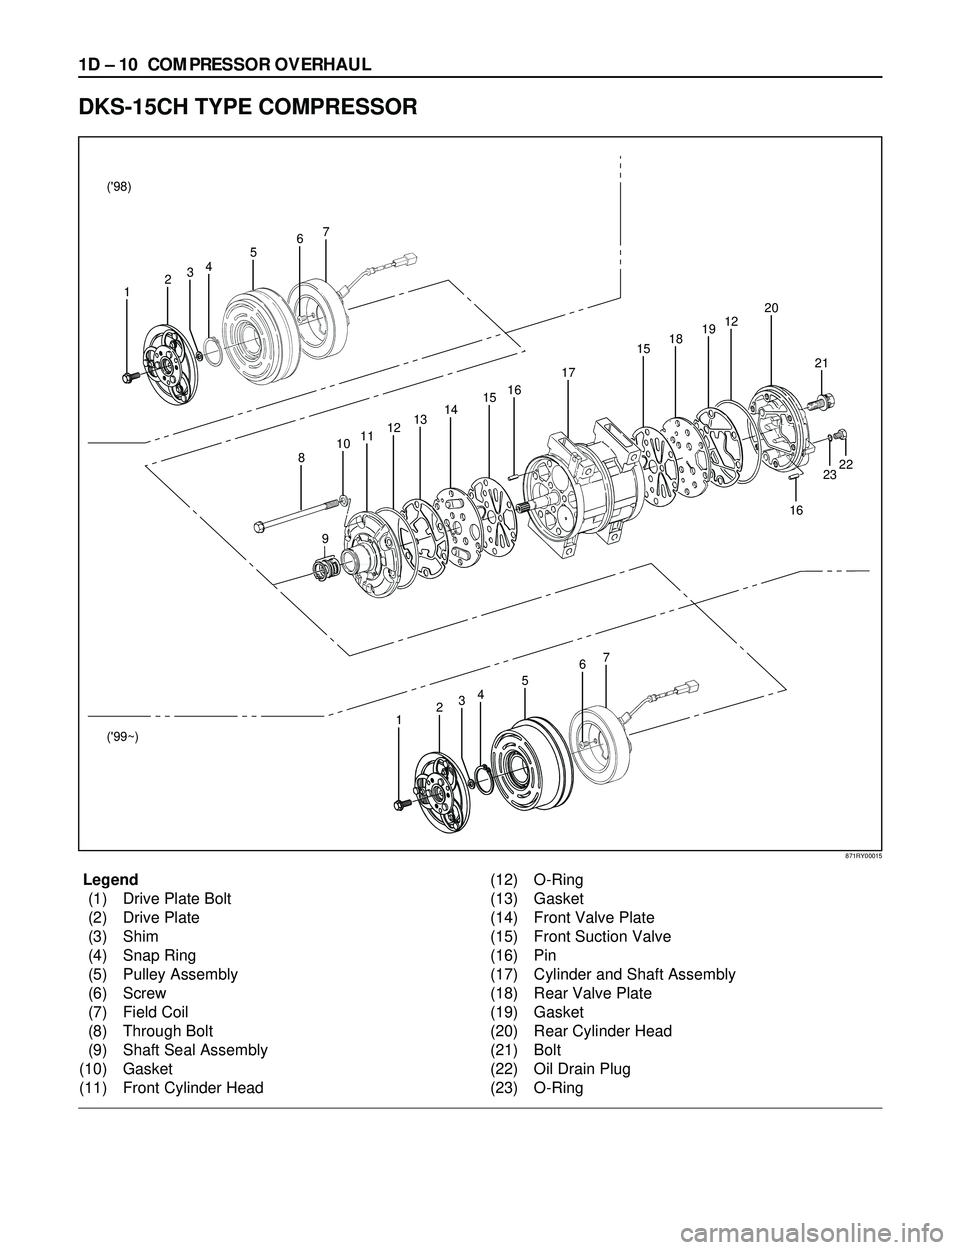 ISUZU TROOPER 1998  Service Repair Manual 1D Ð 10 COMPRESSOR OVERHAUL
Legend
(1) Drive Plate Bolt
(2) Drive Plate
(3) Shim
(4) Snap Ring
(5) Pulley Assembly
(6) Screw
(7) Field Coil
(8) Through Bolt
(9) Shaft Seal Assembly
(10) Gasket
(11) F